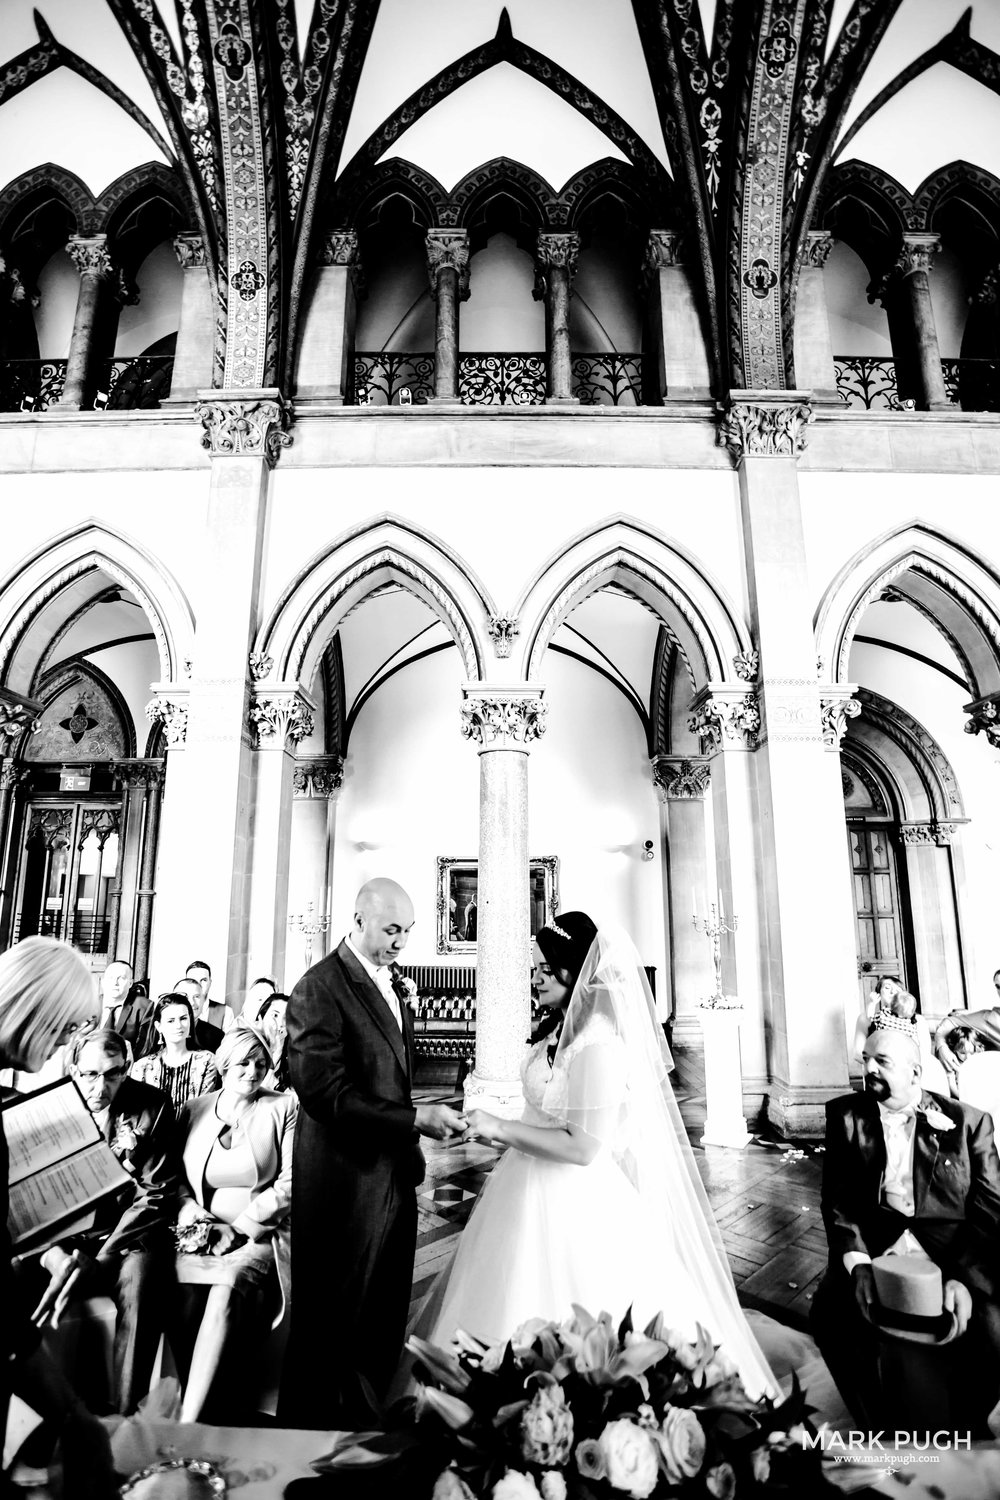 046 - Lauren and Tim - fineART wedding photography at Kelham Hall Newark UK by www.markpugh.com Mark Pugh of www.mpmedia.co.uk_.JPG